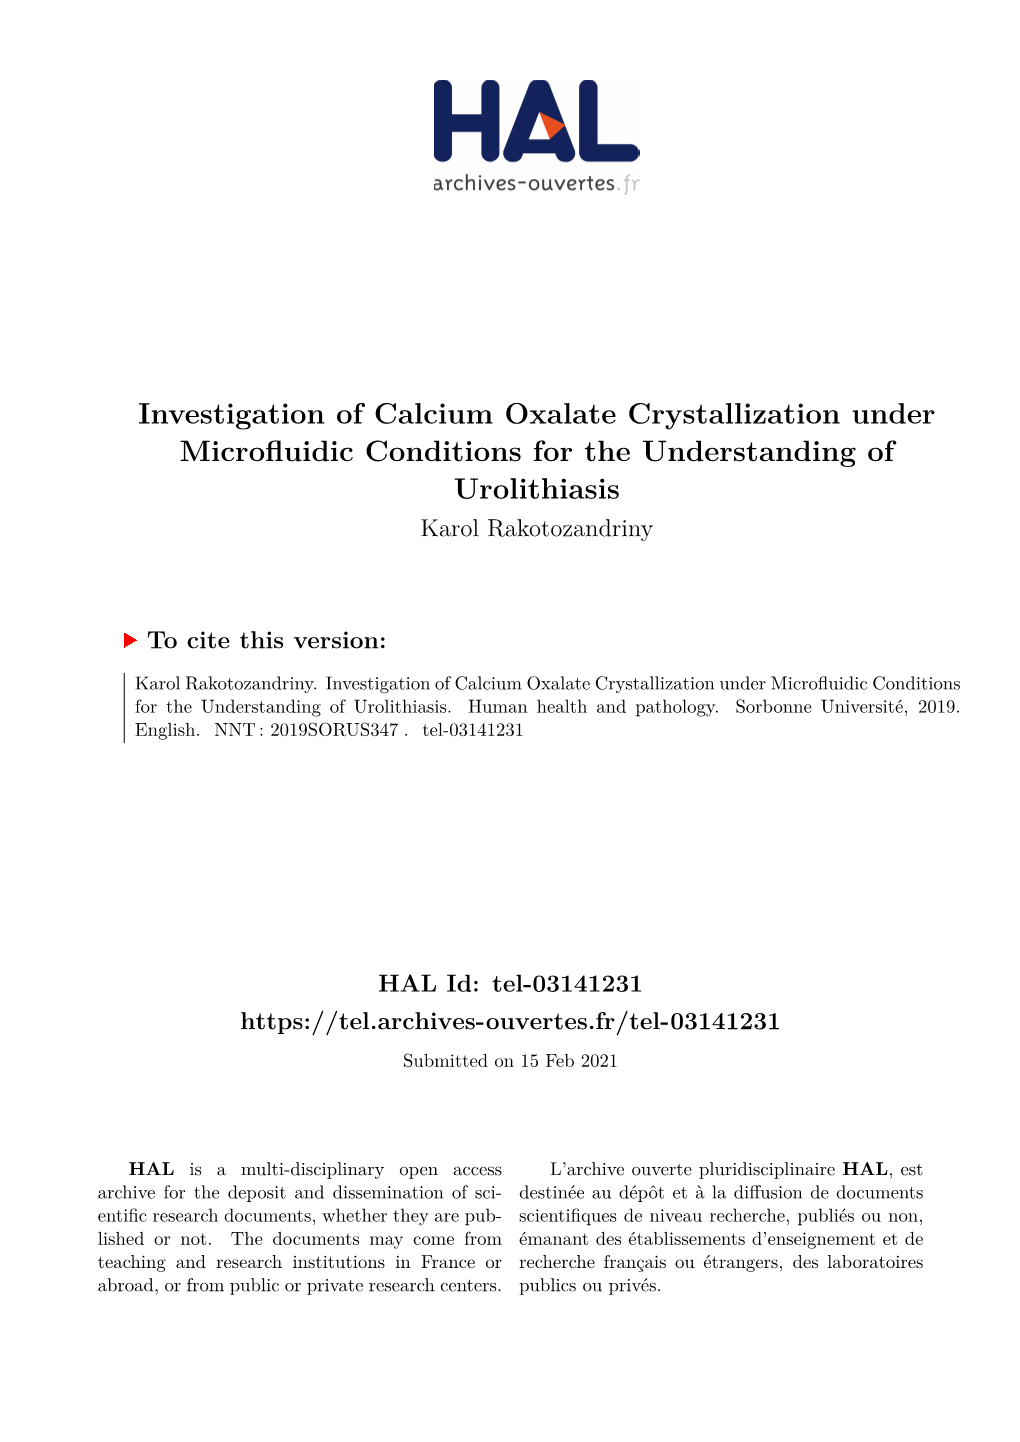 Investigation of Calcium Oxalate Crystallization Under Microfluidic Conditions for the Understanding of Urolithiasis Karol Rakotozandriny